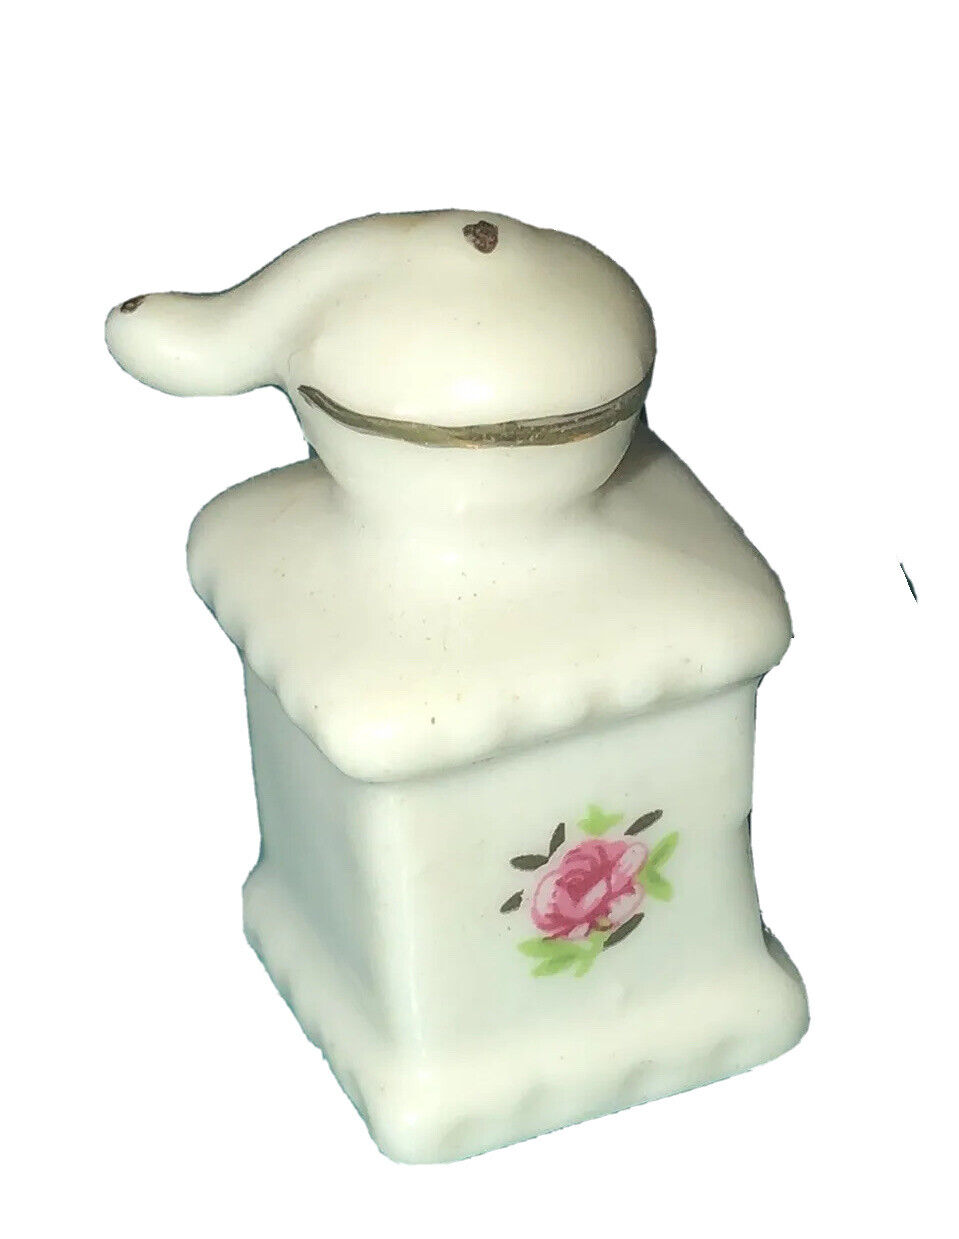 Dollhouse Miniature Porcelain W/ Rose Figurine Coffee Grinder Fun